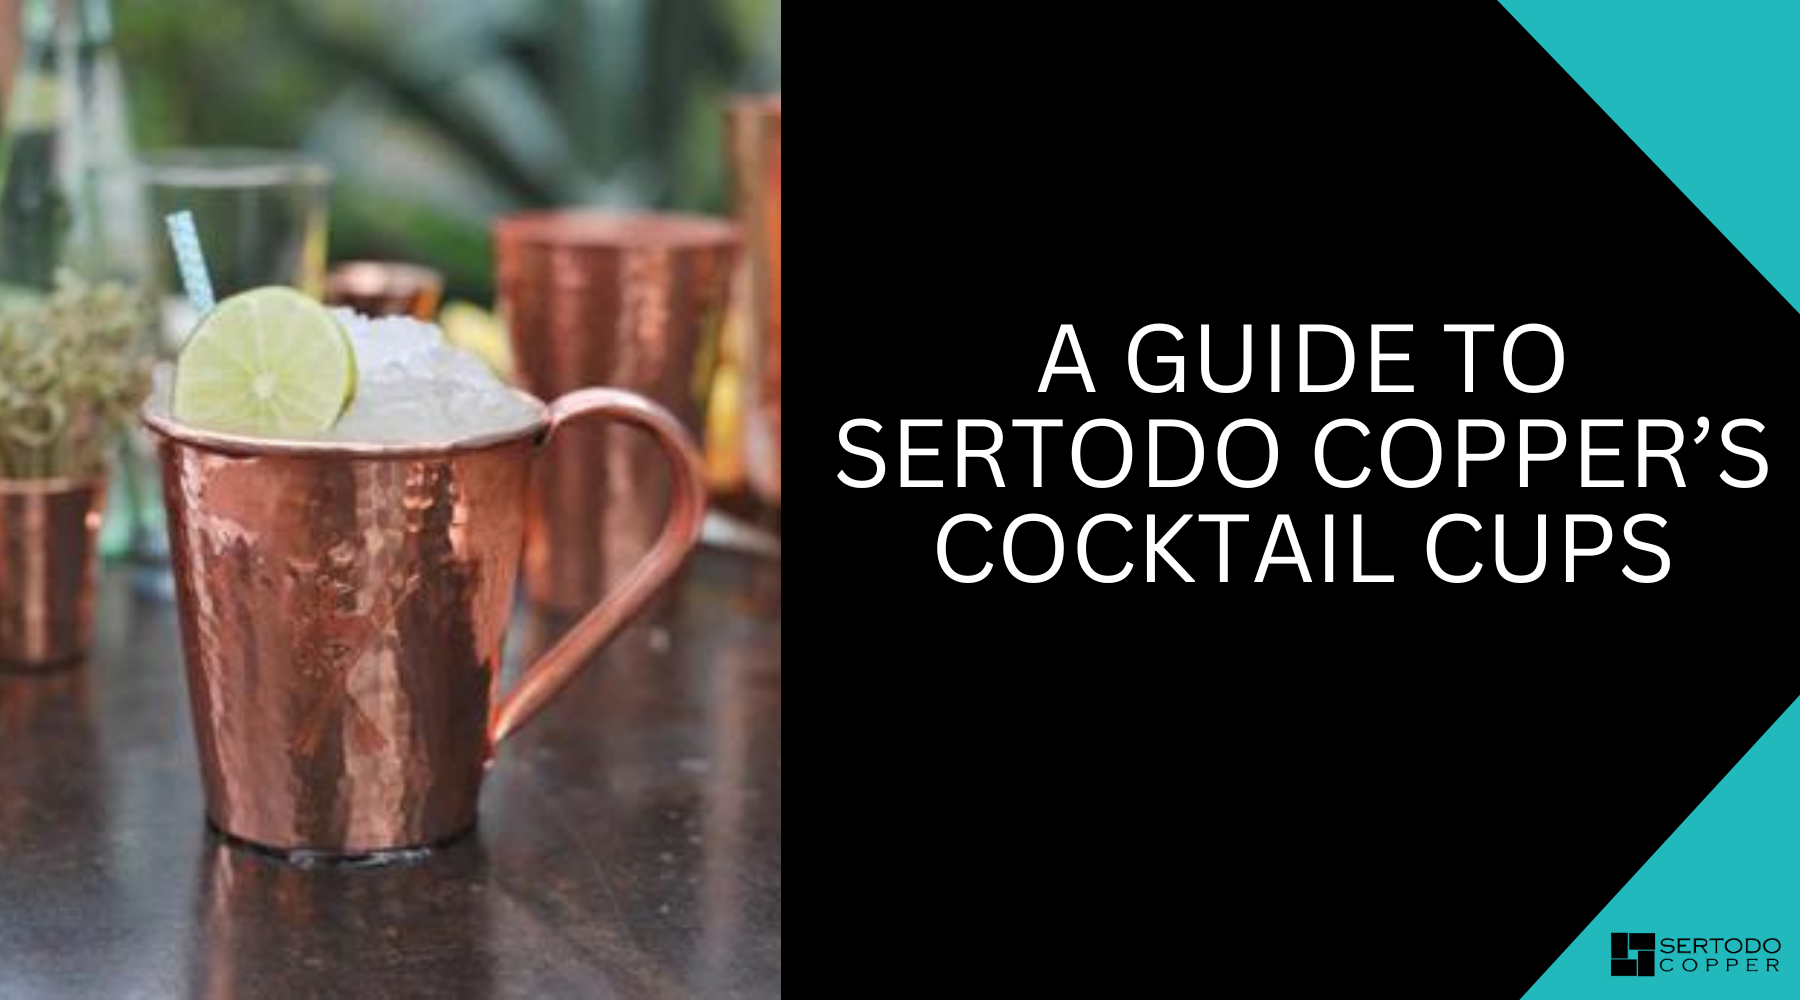 Guide to Sertodo copper cocktail cups